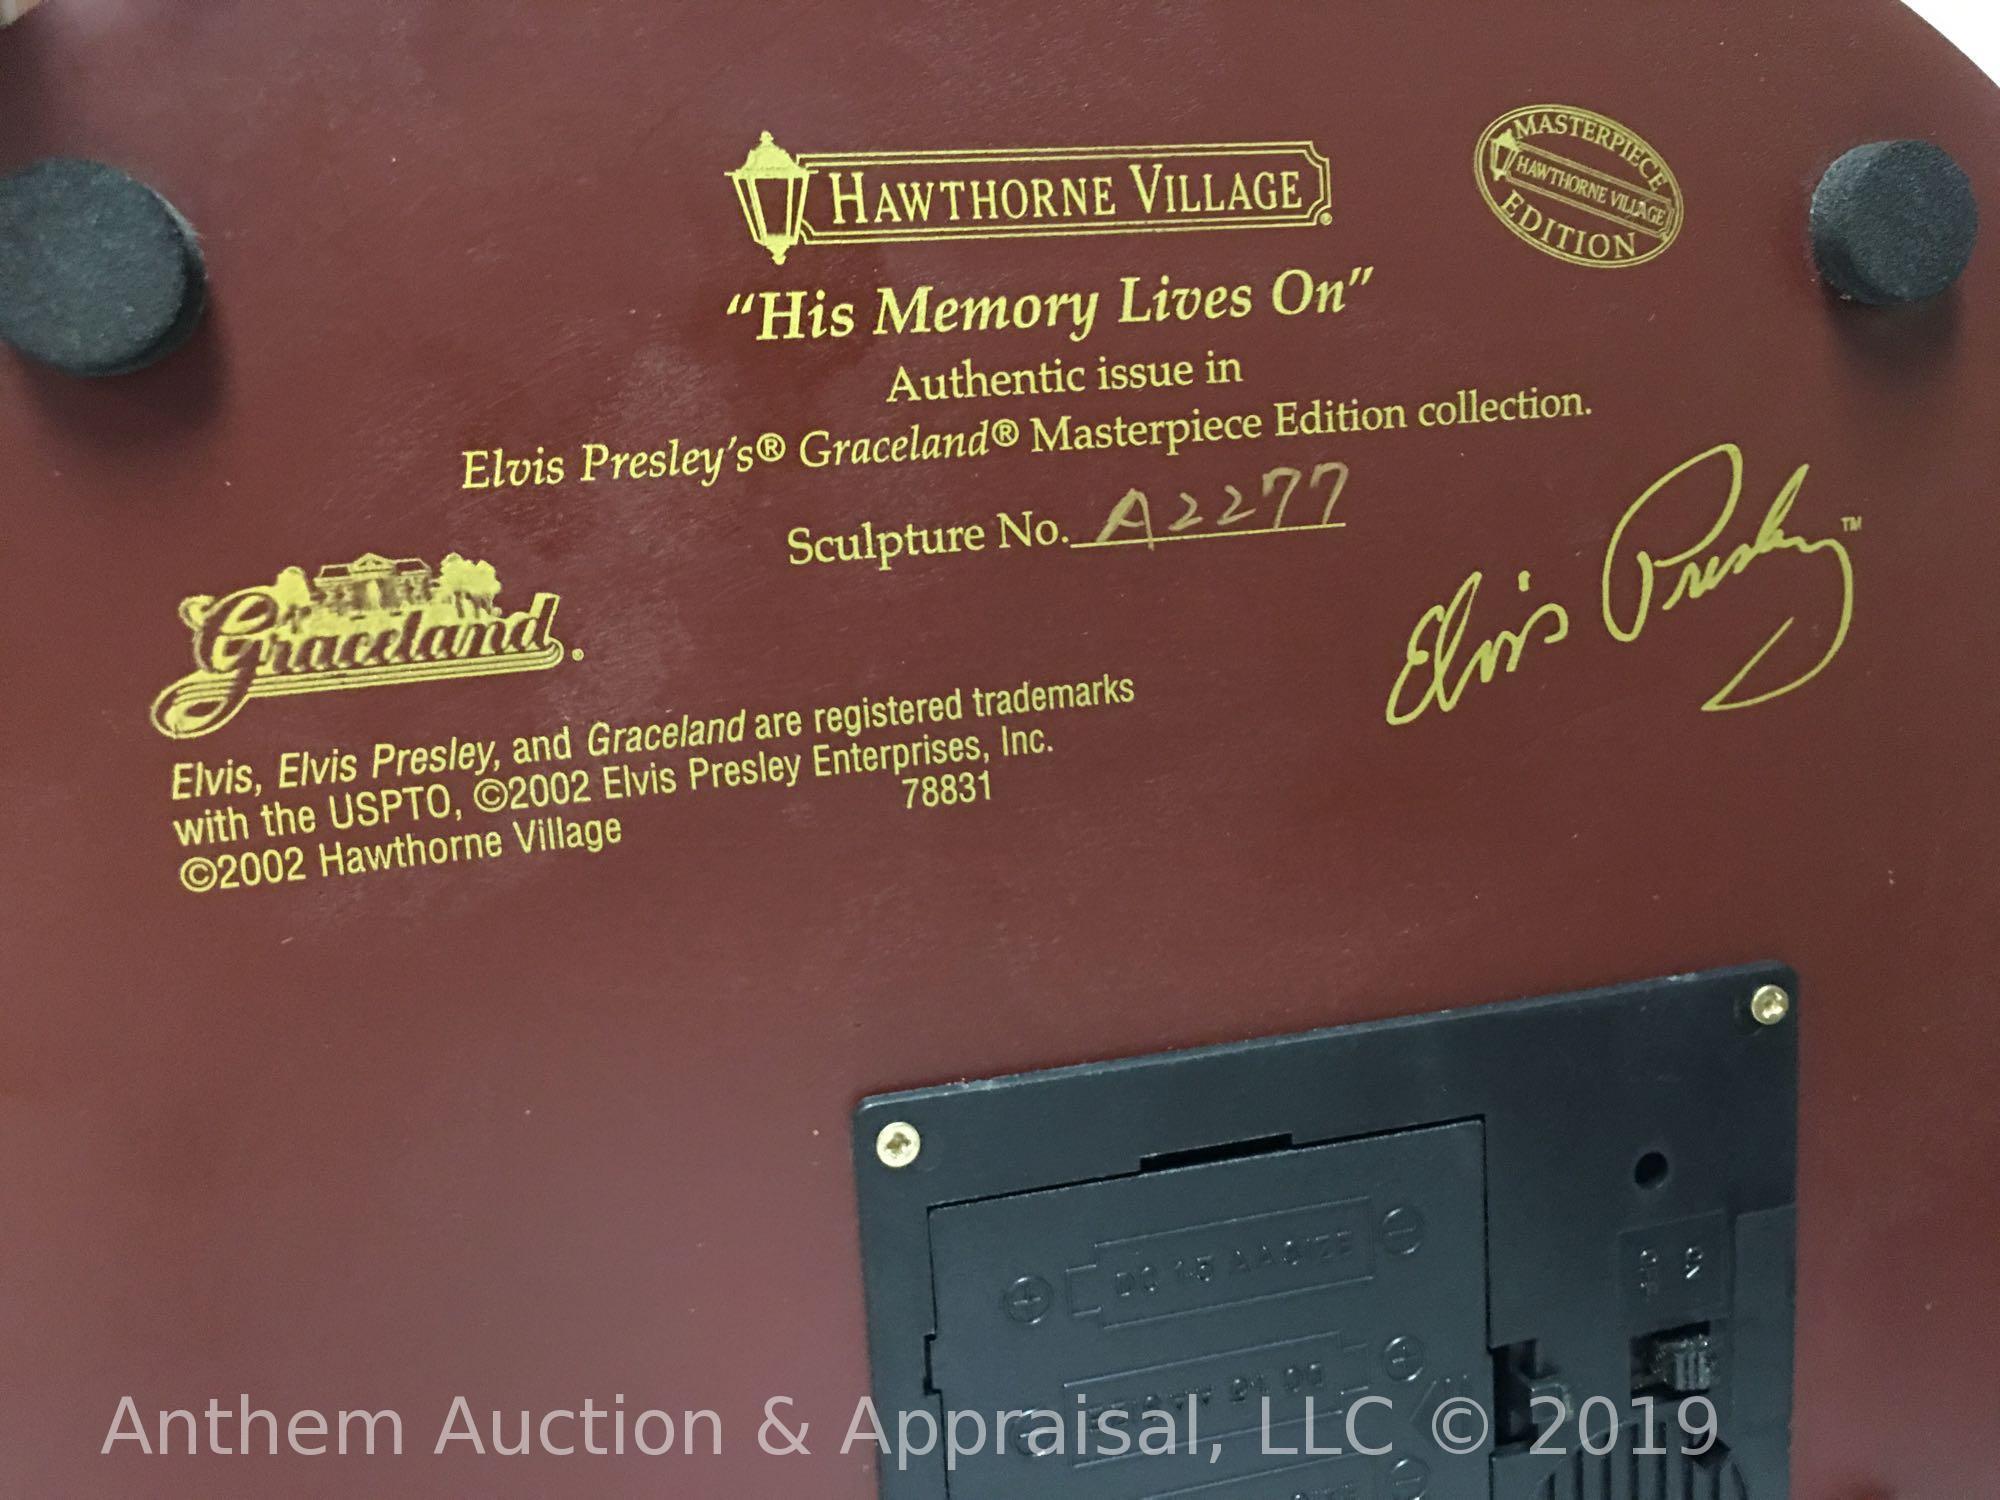 Elvis Presley Hawthorne Village Graceland Masterpiece Ed. collection "His Memory Lives On" sculpture